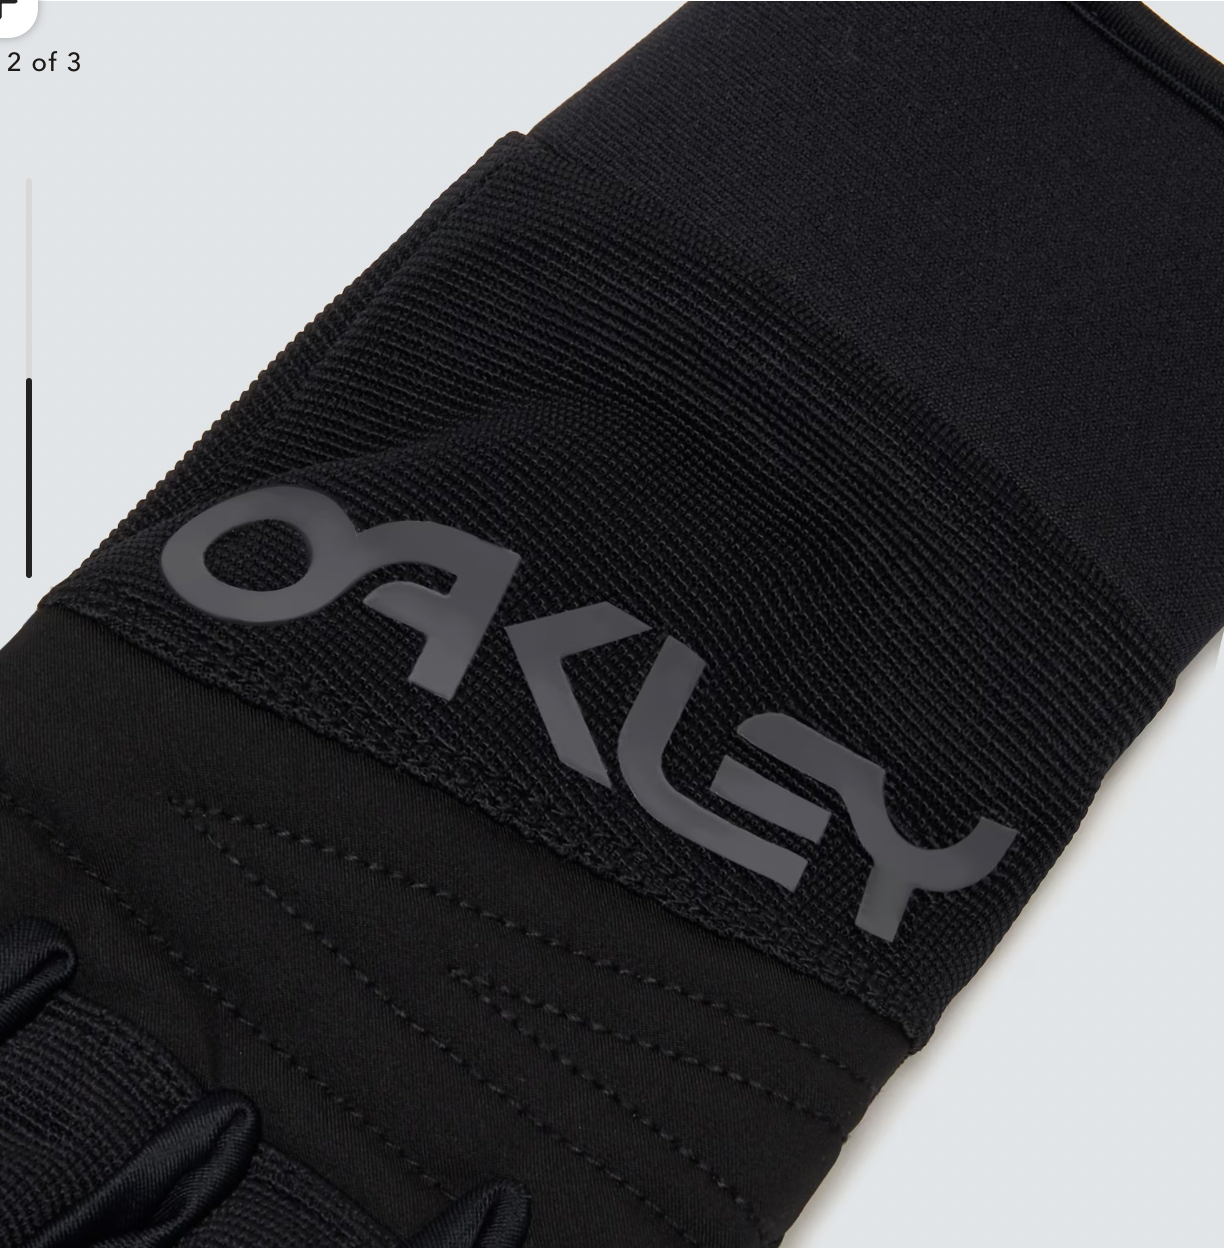 OAKLEY Factory Pilot Core Glove